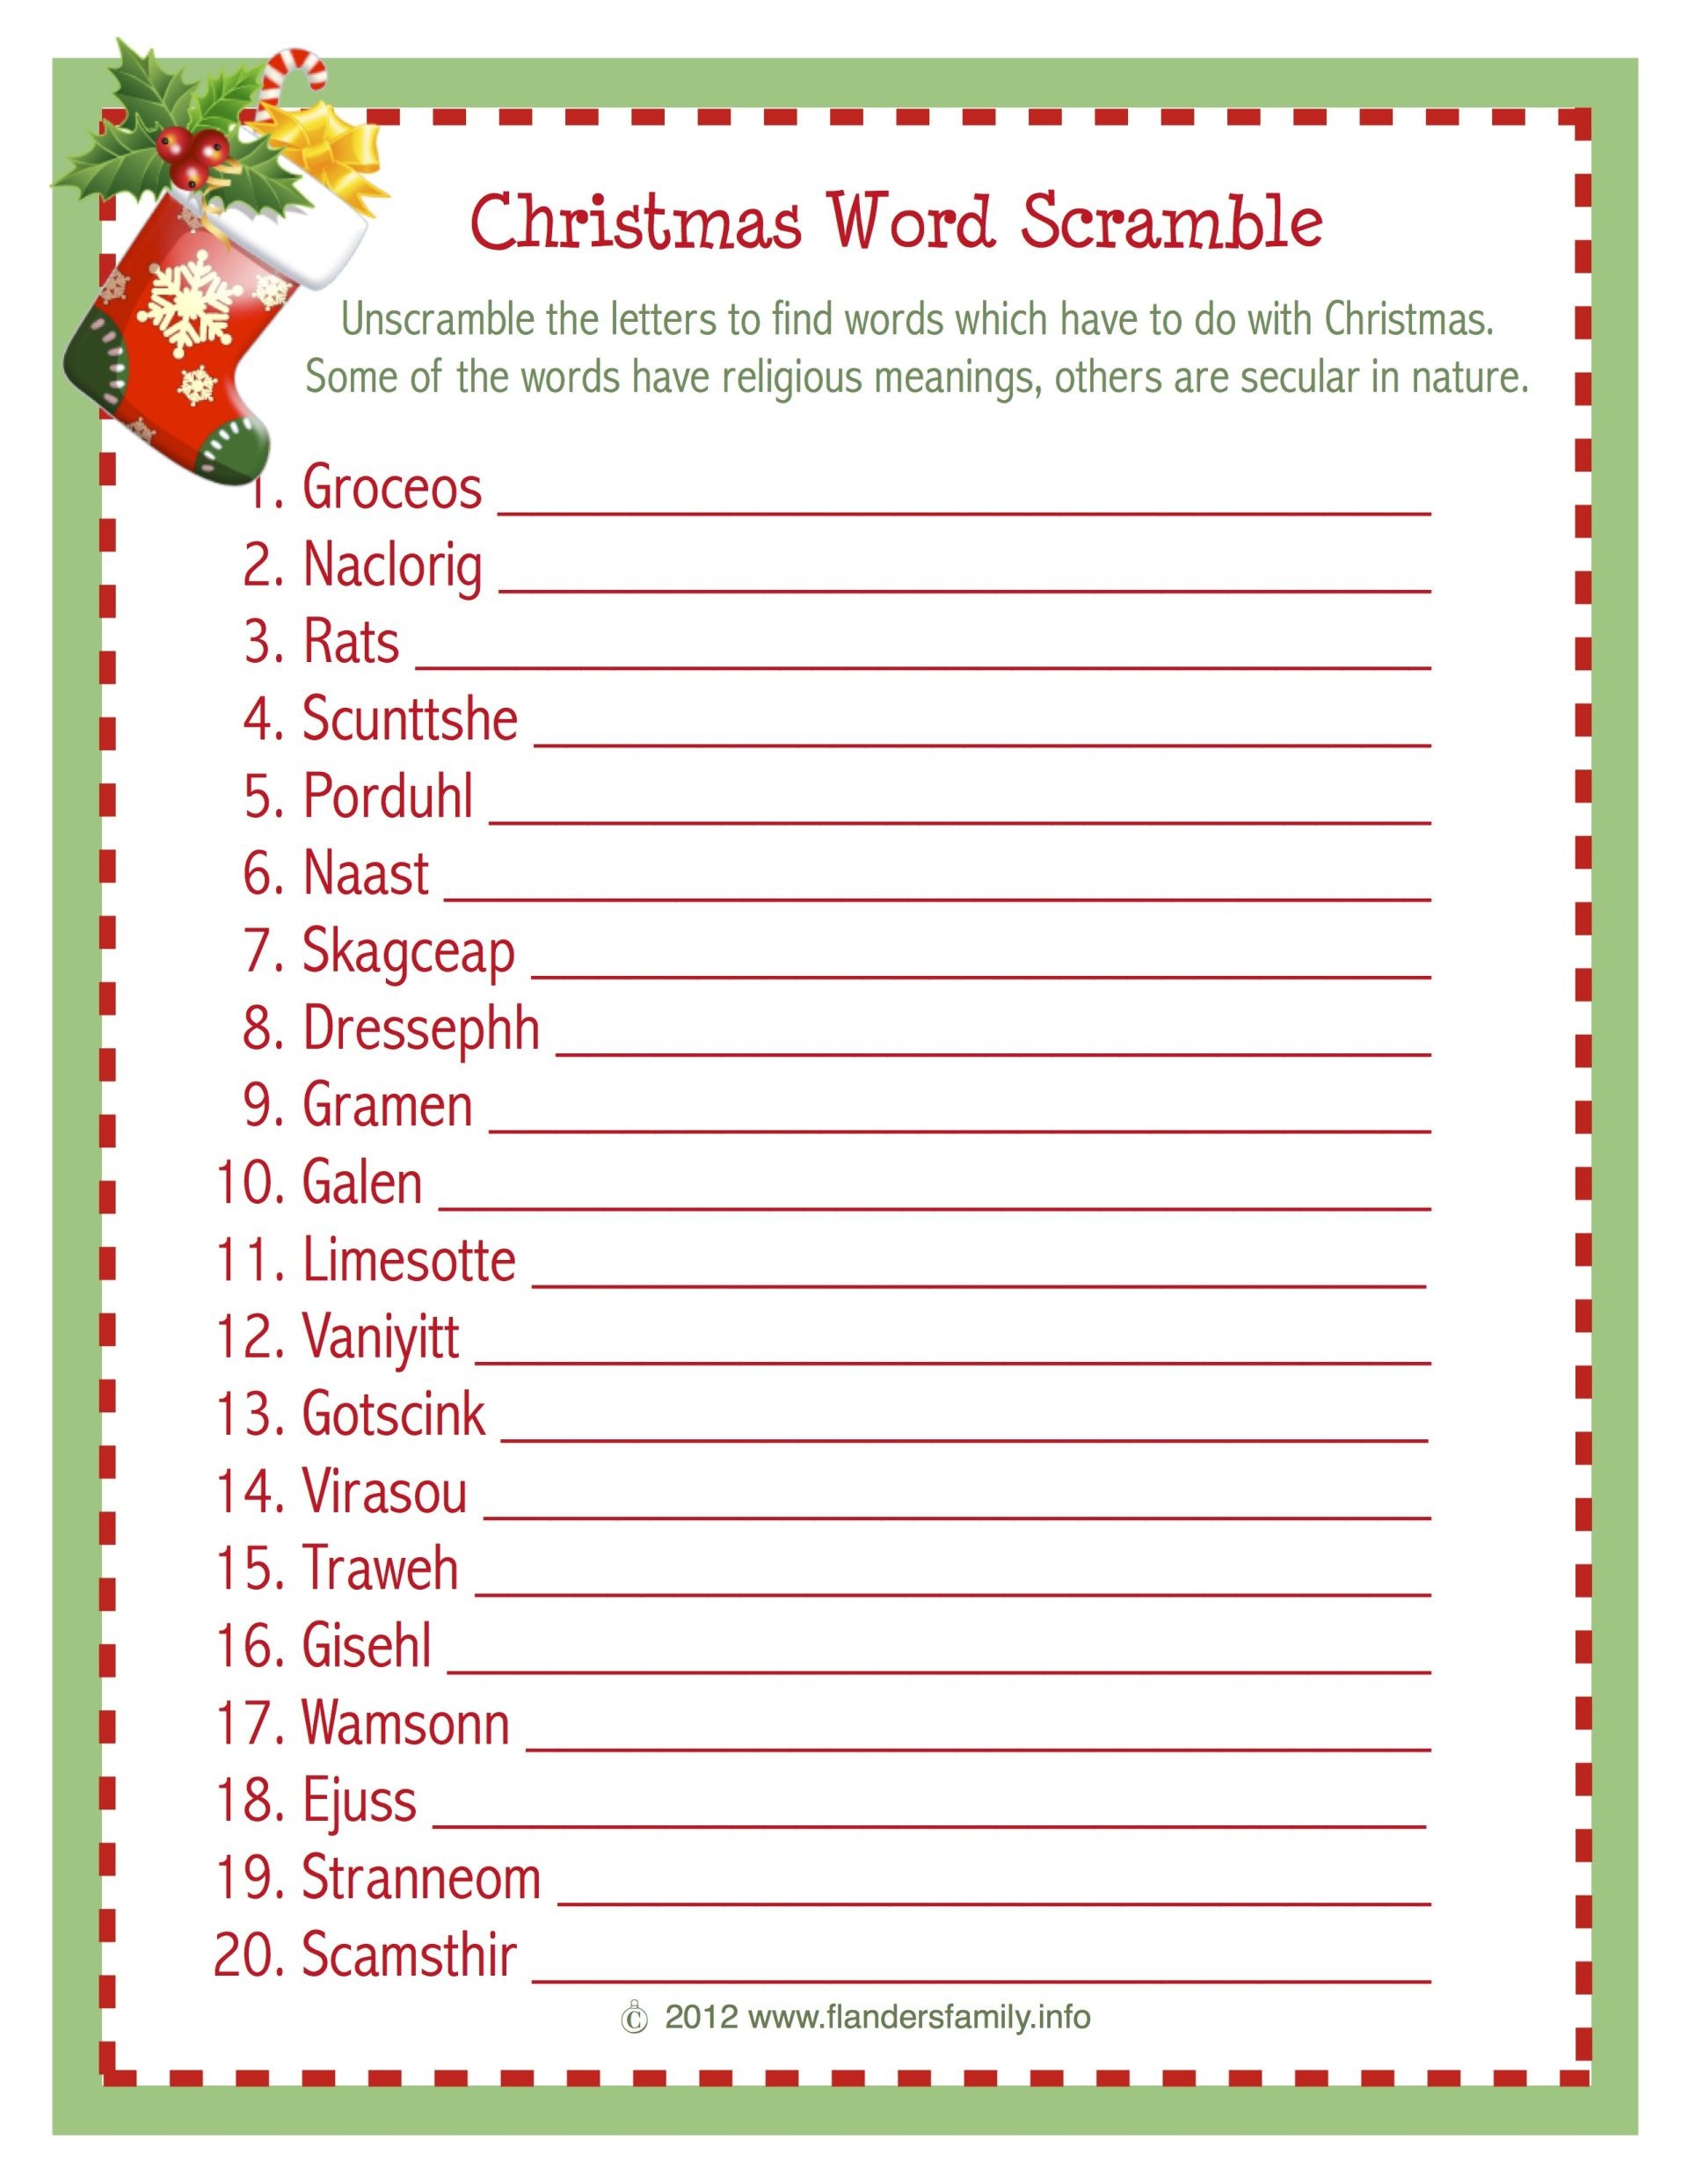 Christmas Word Scramble (Free Printable) | Flanders Family | Group - Free Printable Christmas Word Scramble With Answers